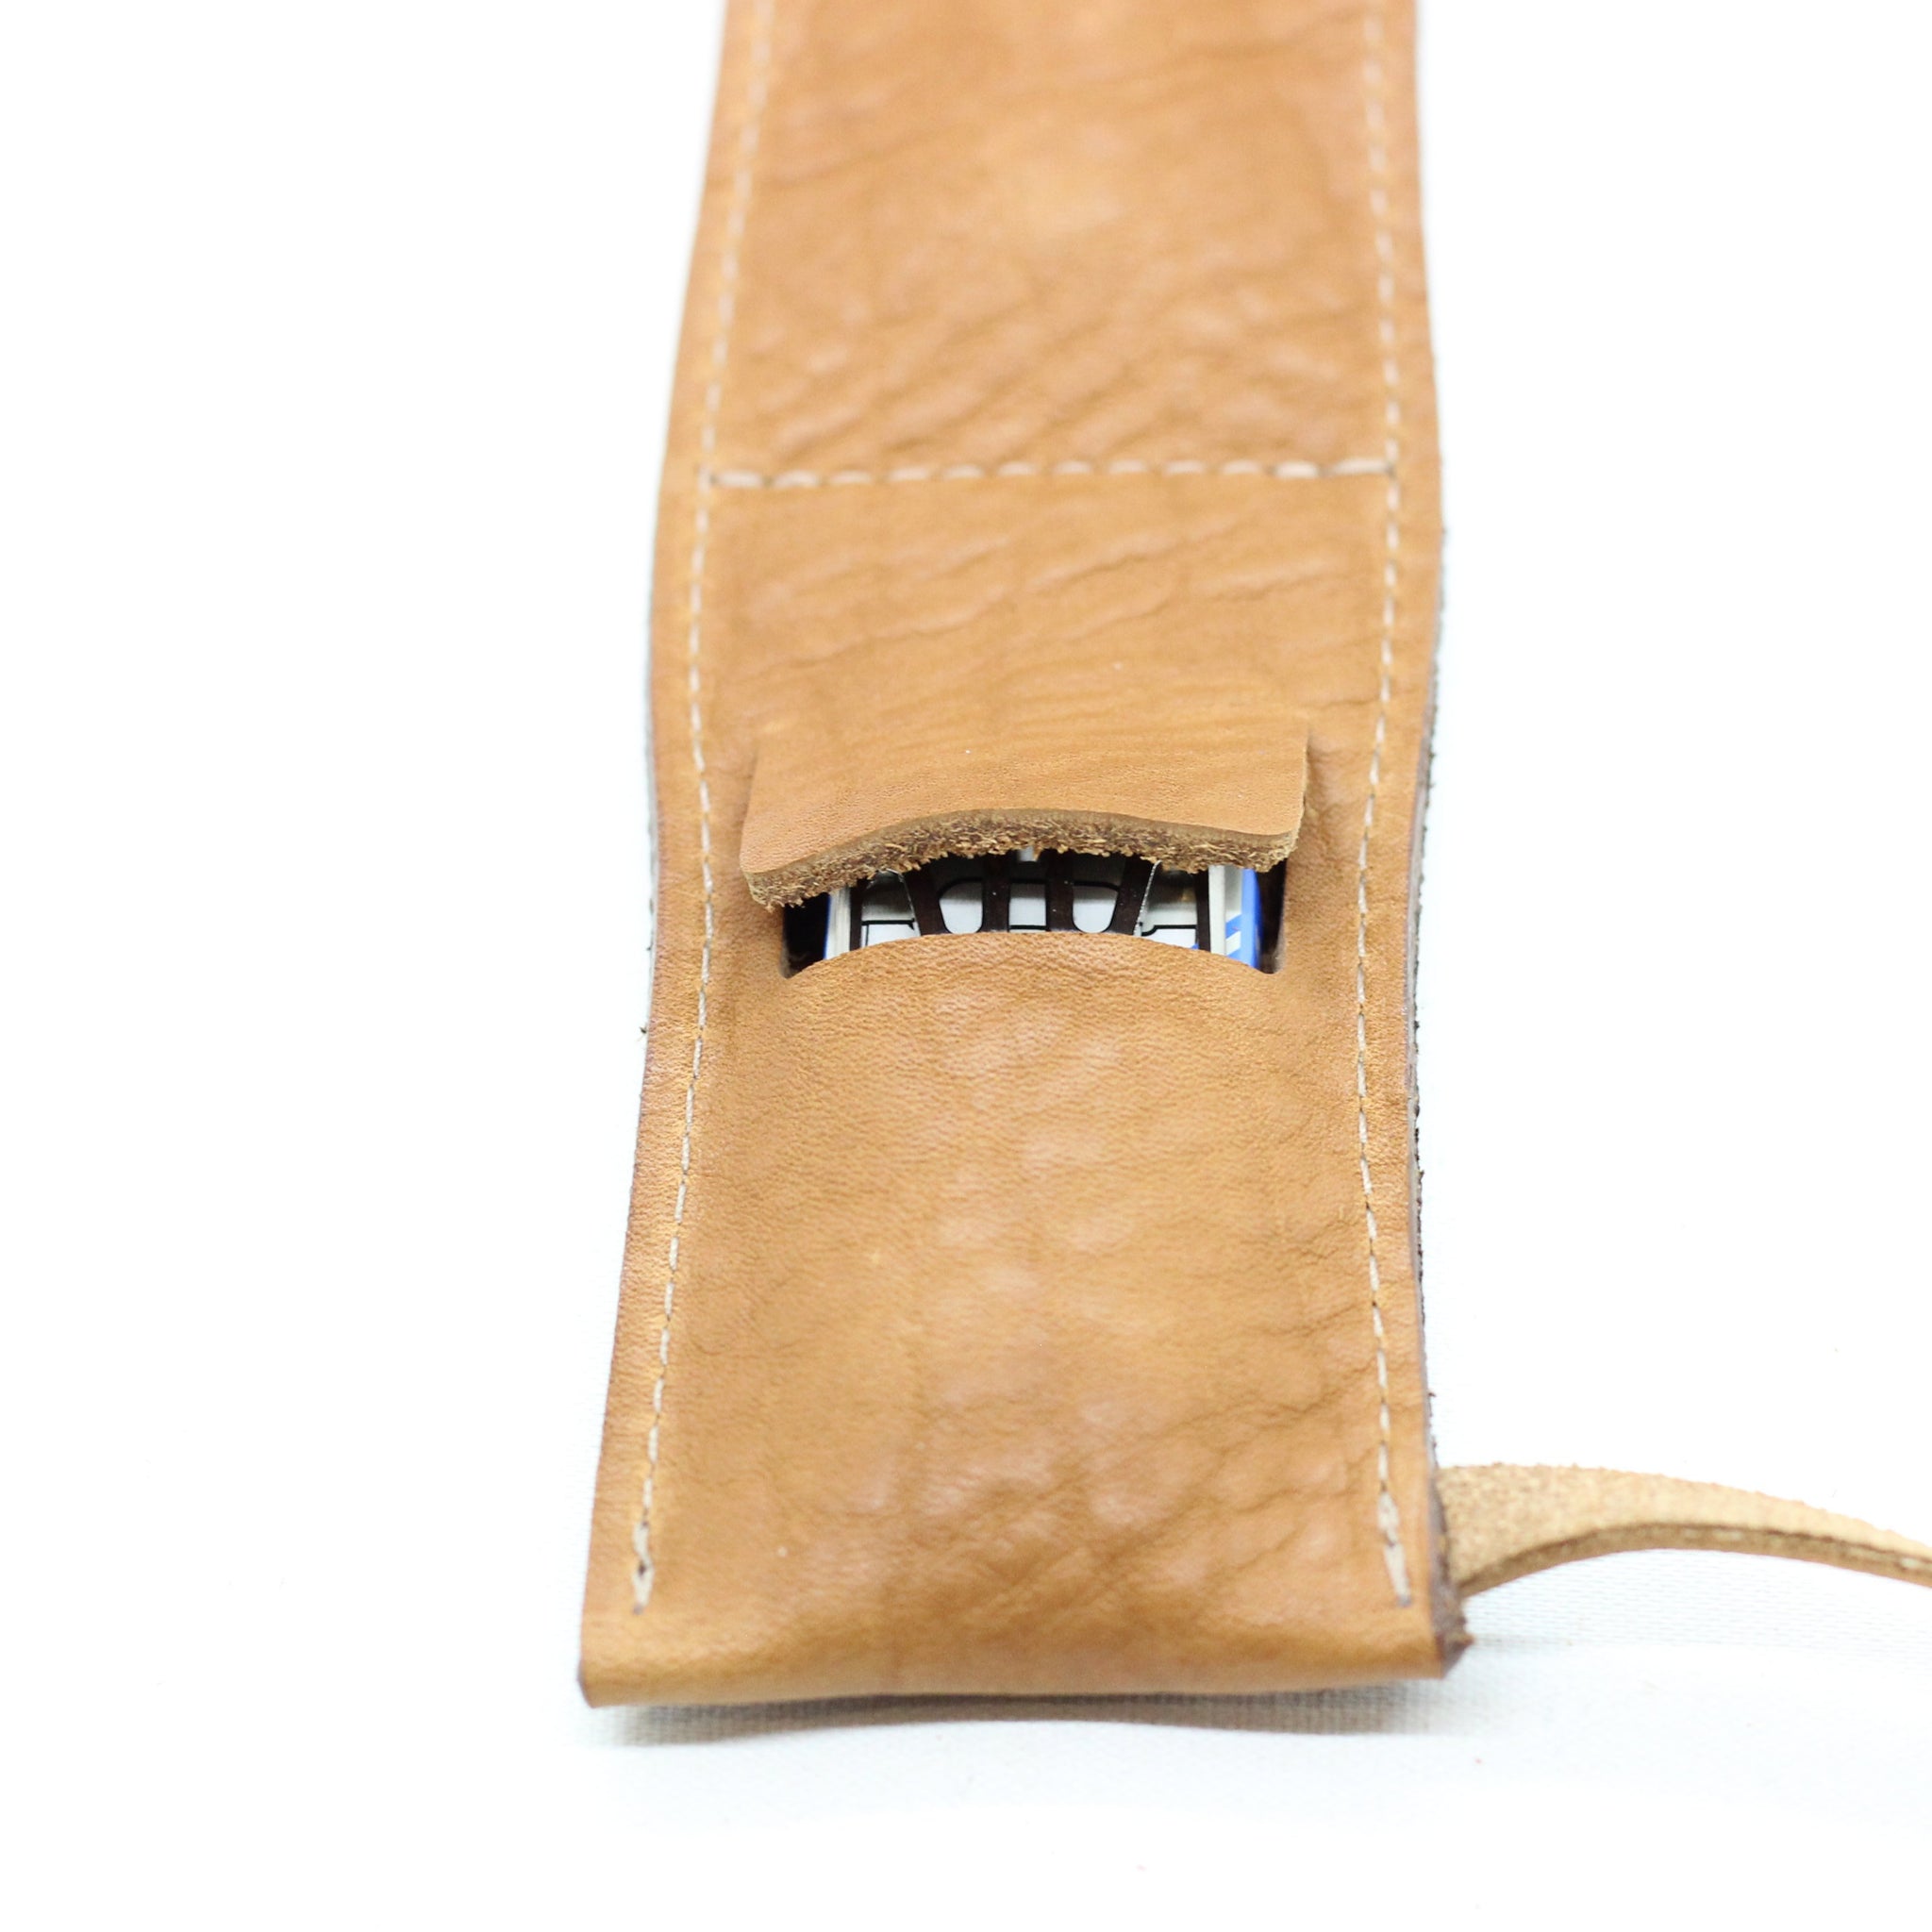 Safety razor leather case for Cx razor - Pouch view